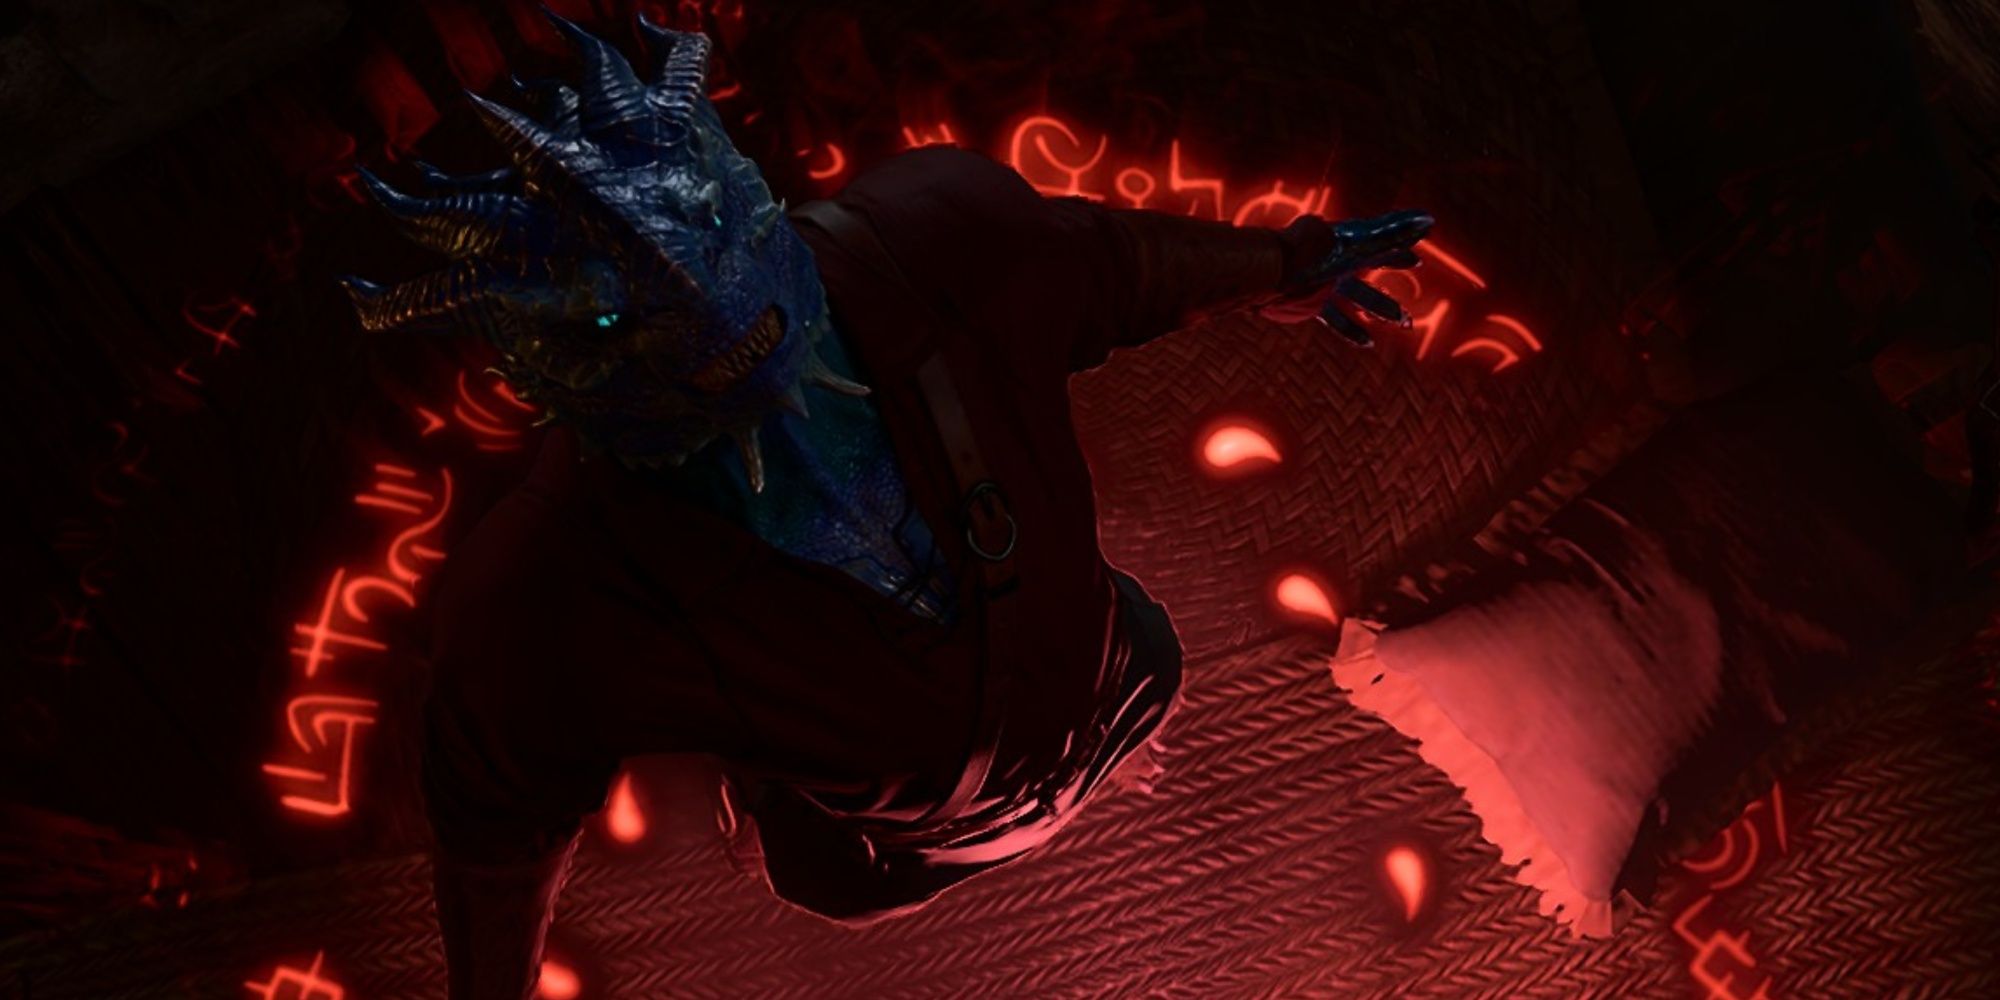 A Dragonborn Dark Urge receiving evil powers in Baldur's Gate 3